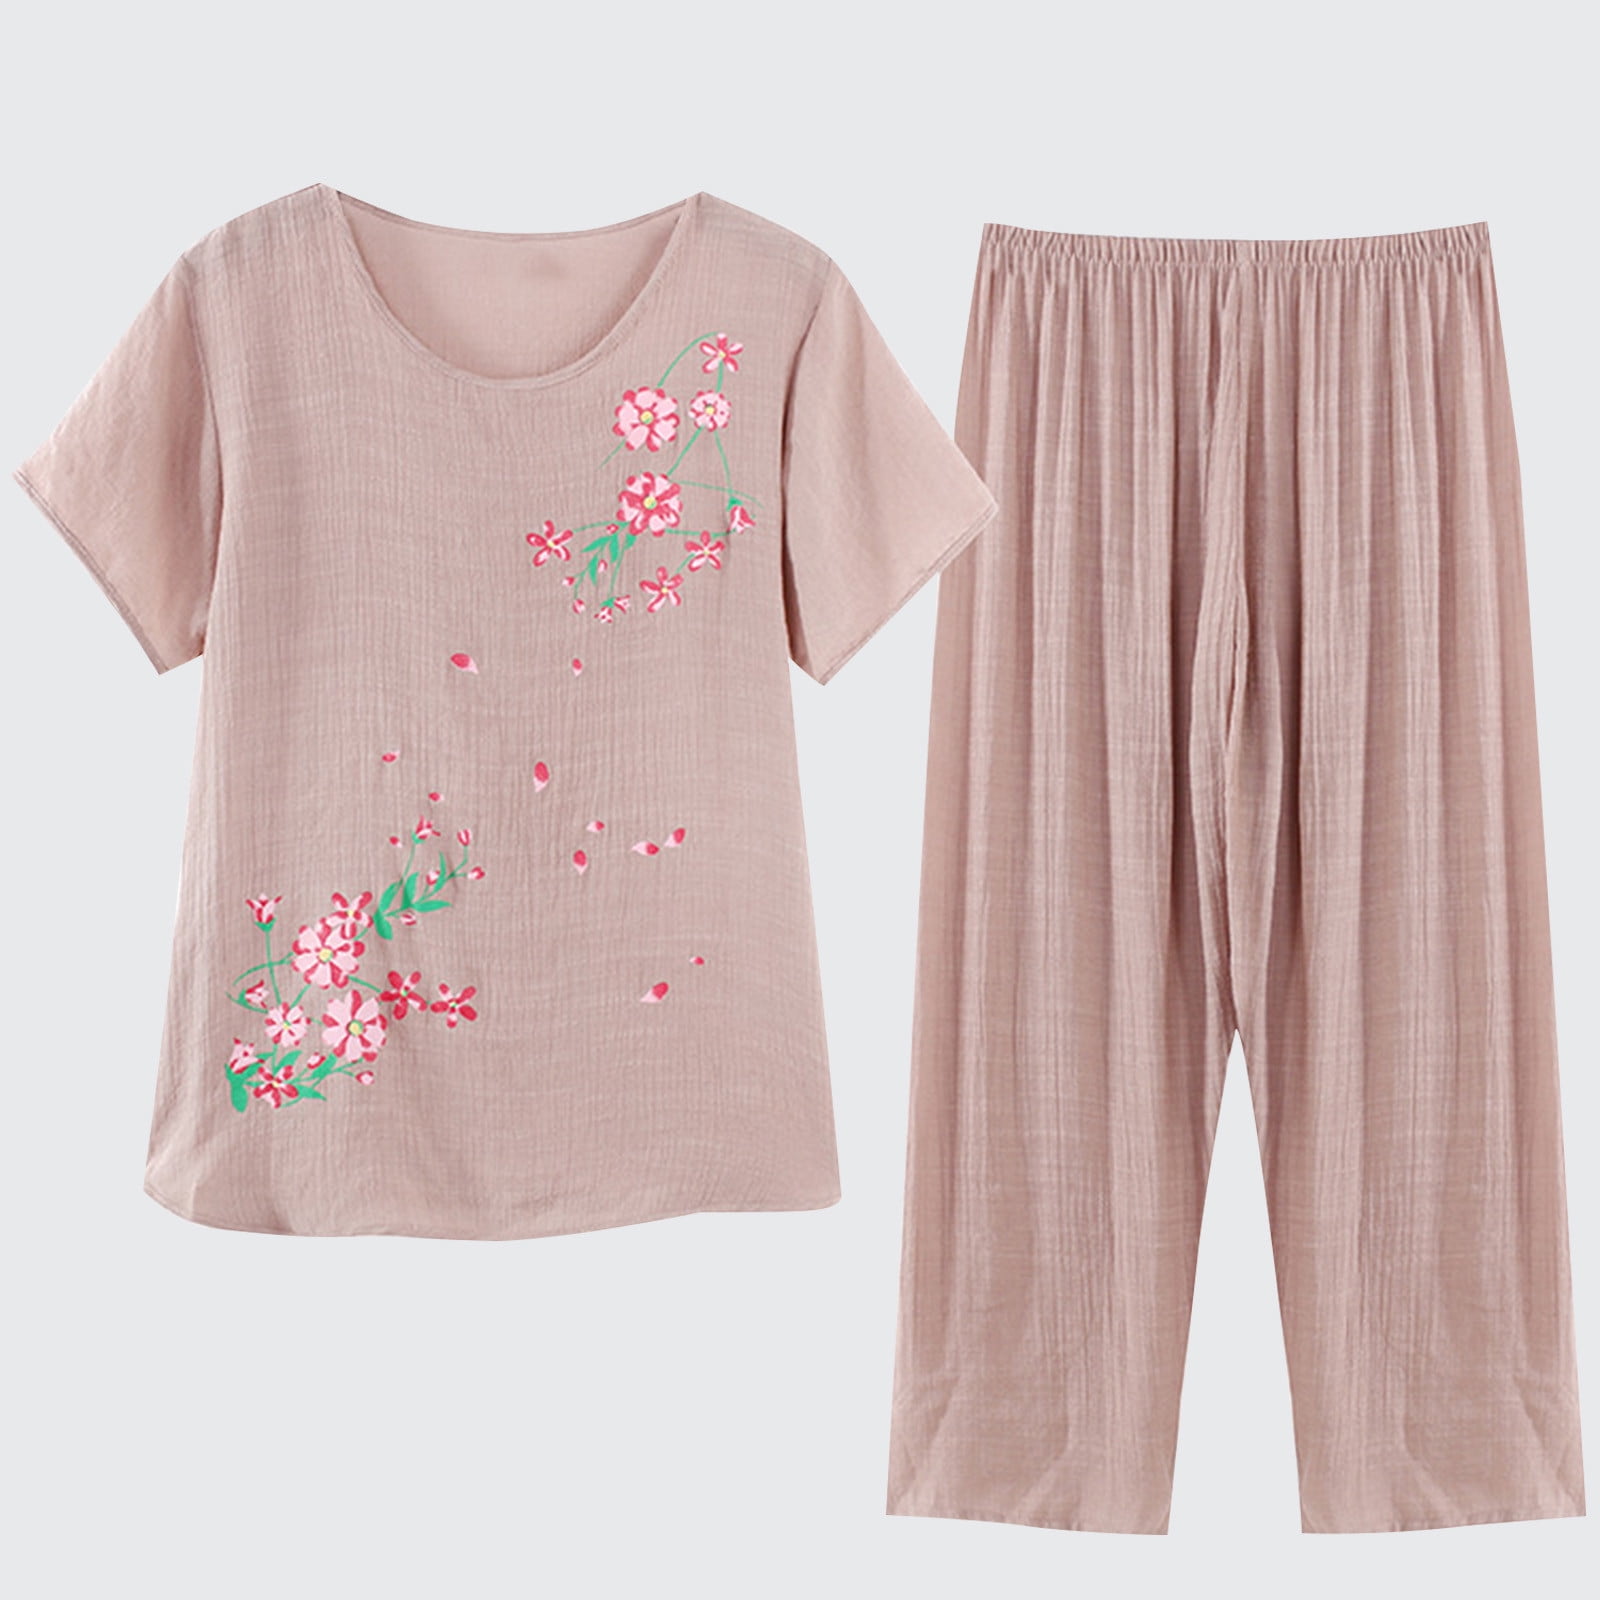 EGNMCR Womens Cotton Pajama Sets Floral Print Short Sleeve Sleepwear ...